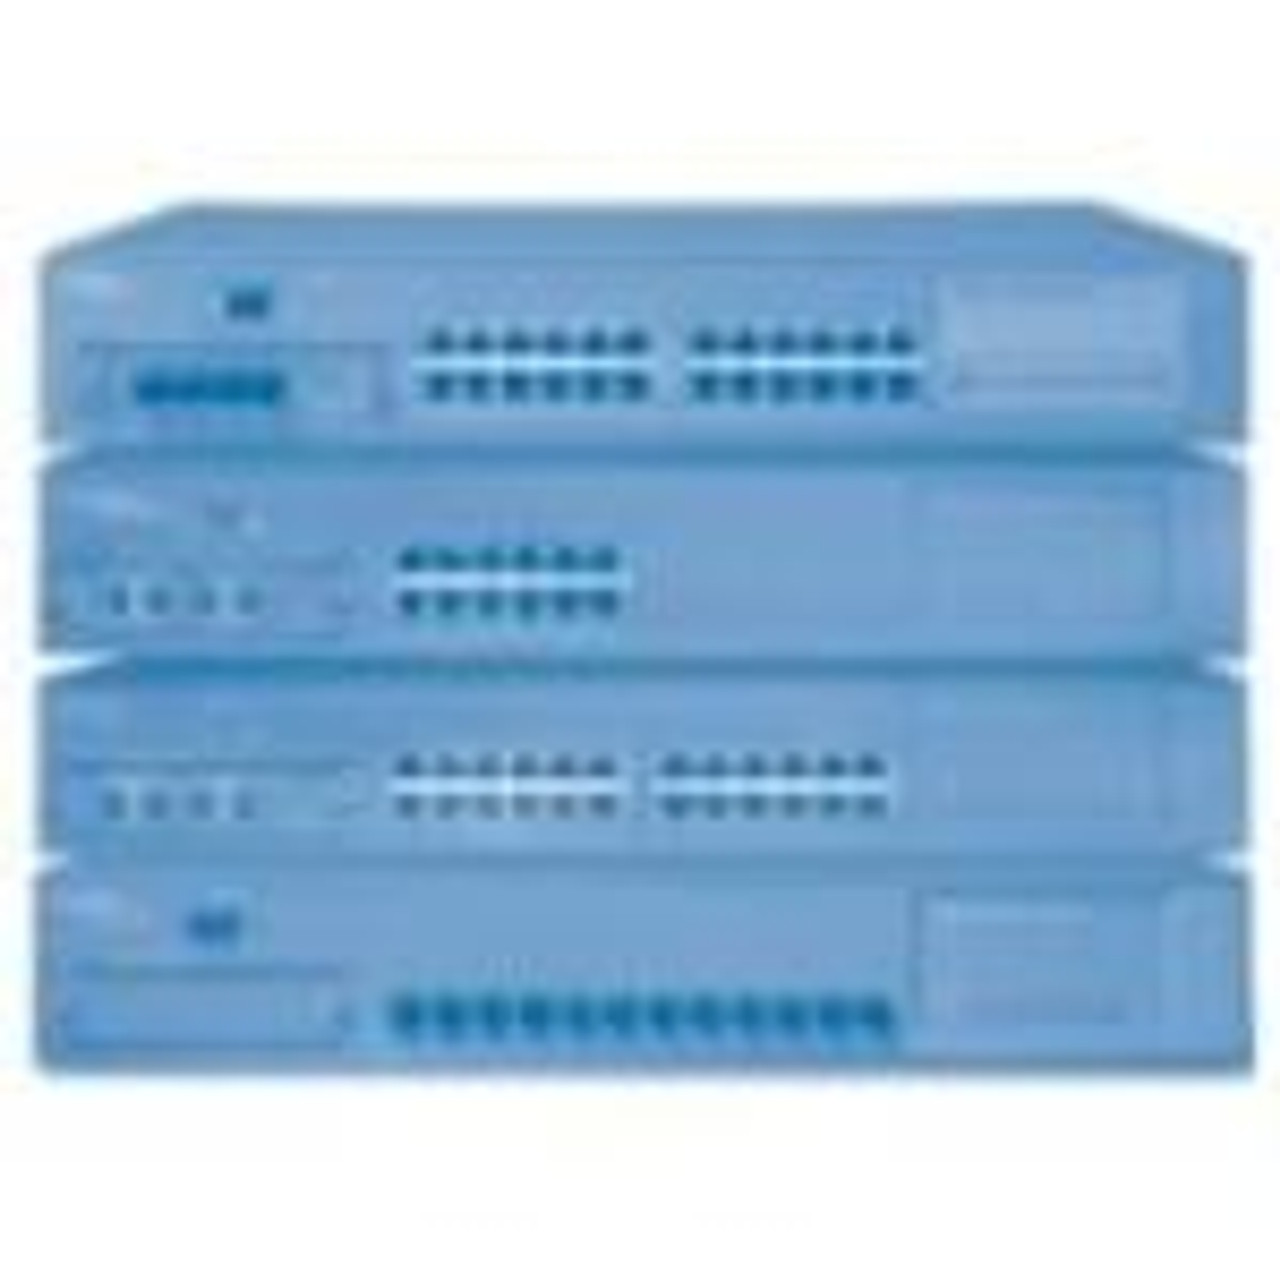 RMAL2012E16 Nortel BayStack 410-24T 24-Ports SFP Ethernet Switch (24 10 BaseT ports plus 1 MDA slot and 1 Cascade Slot) (Refurbished)